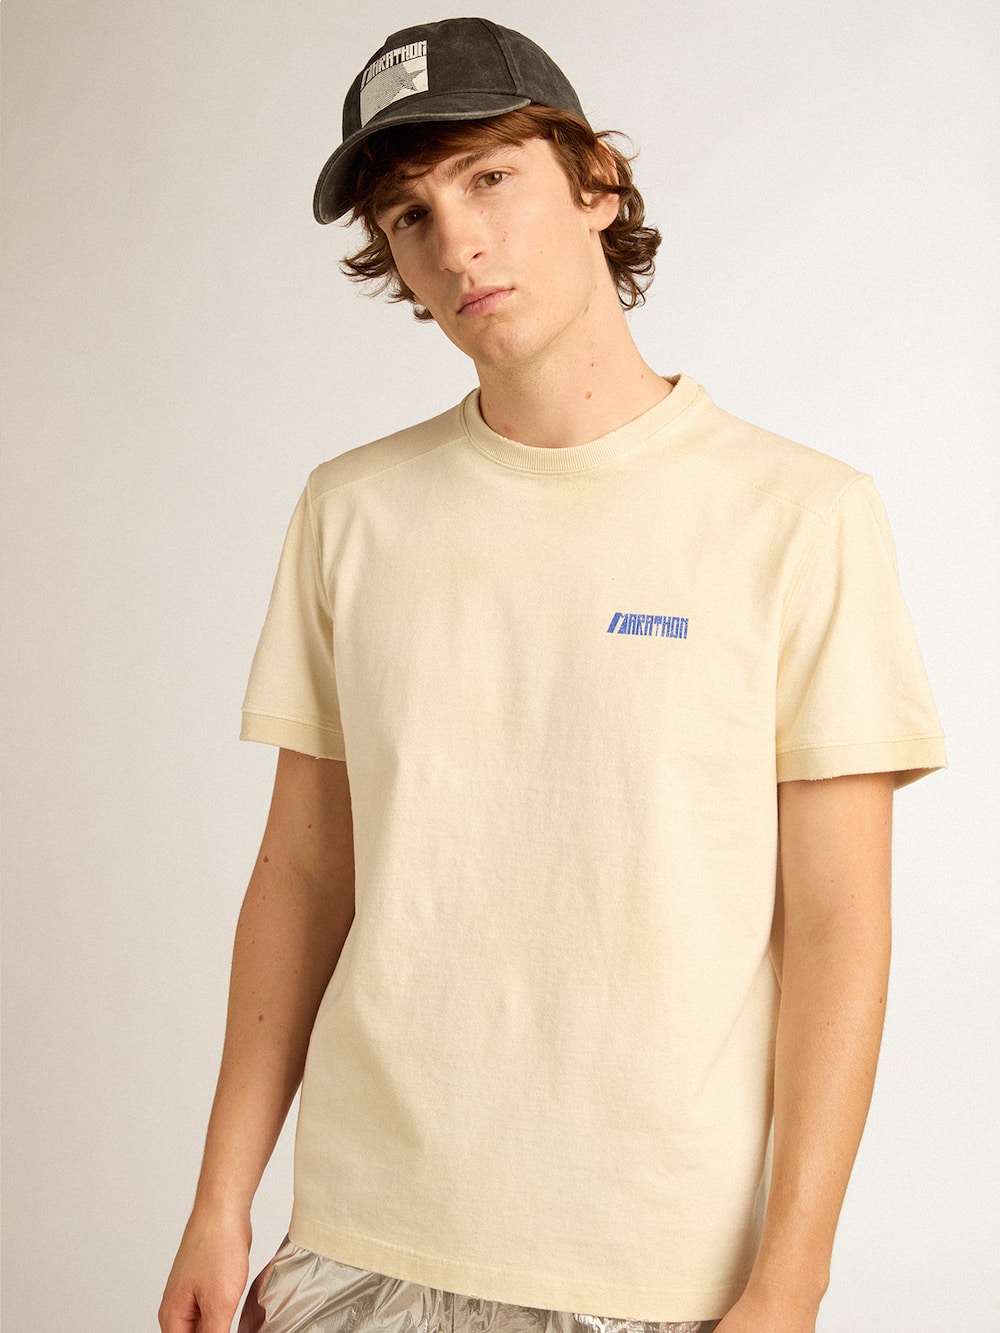 Golden Goose - T-shirt in cotone color bianco vissuto con logo Marathon blu in 